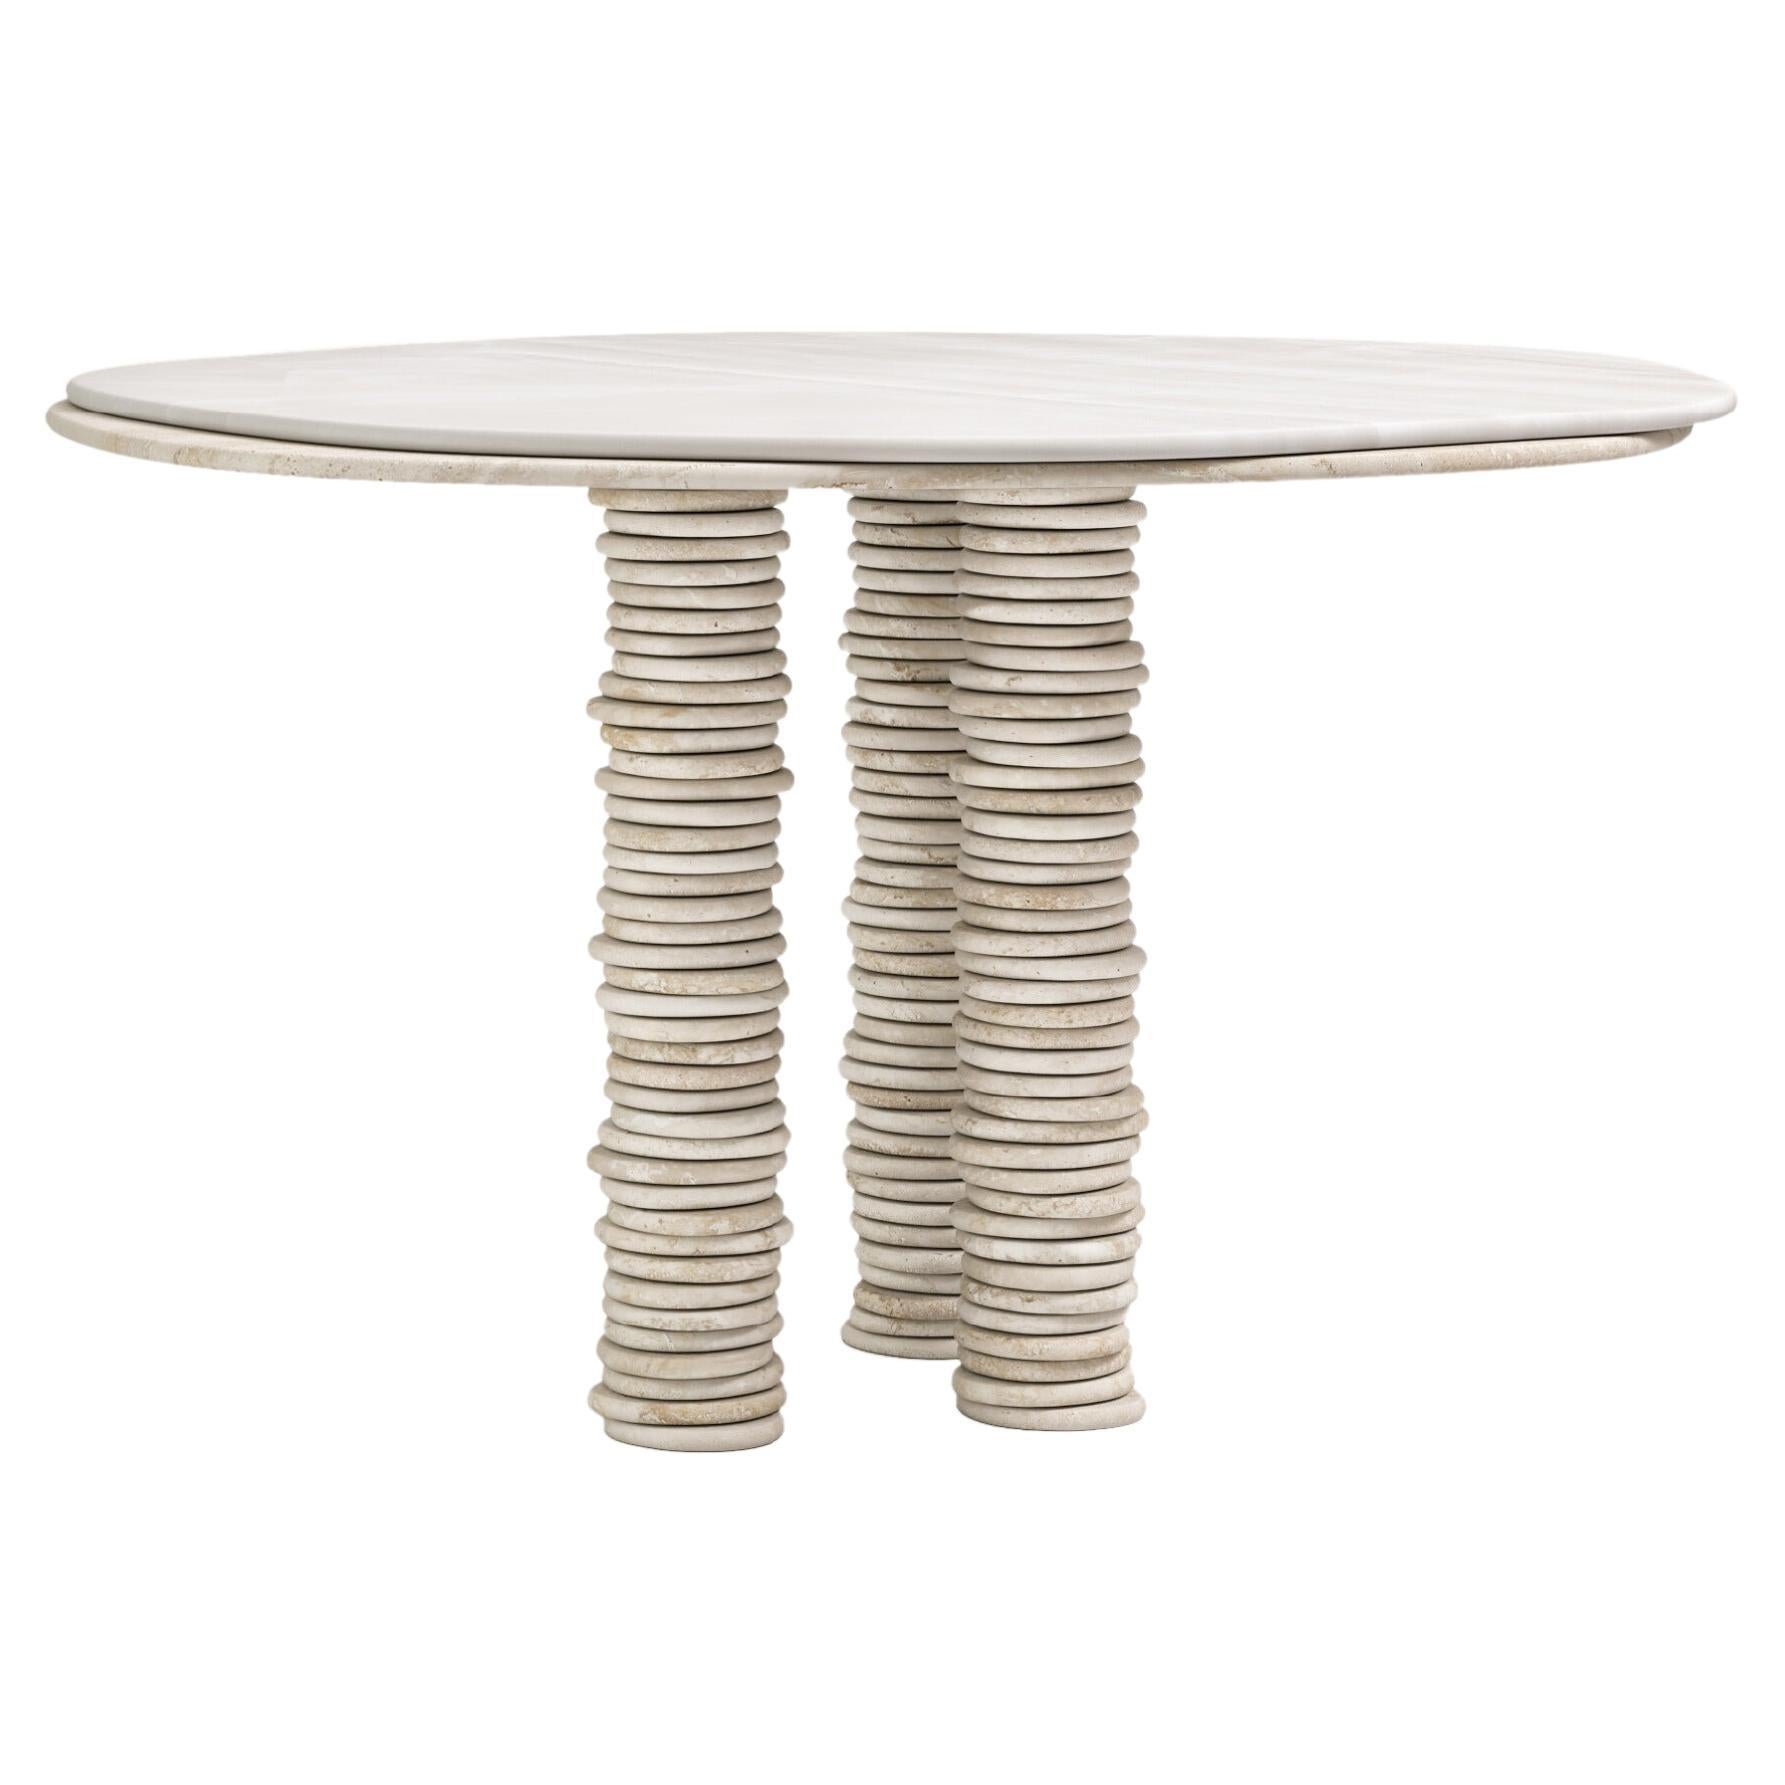 FORM(LA) Onda Round Dining Table 60”L x 60”W x 29”H Onyx & Travertino Navona VC For Sale